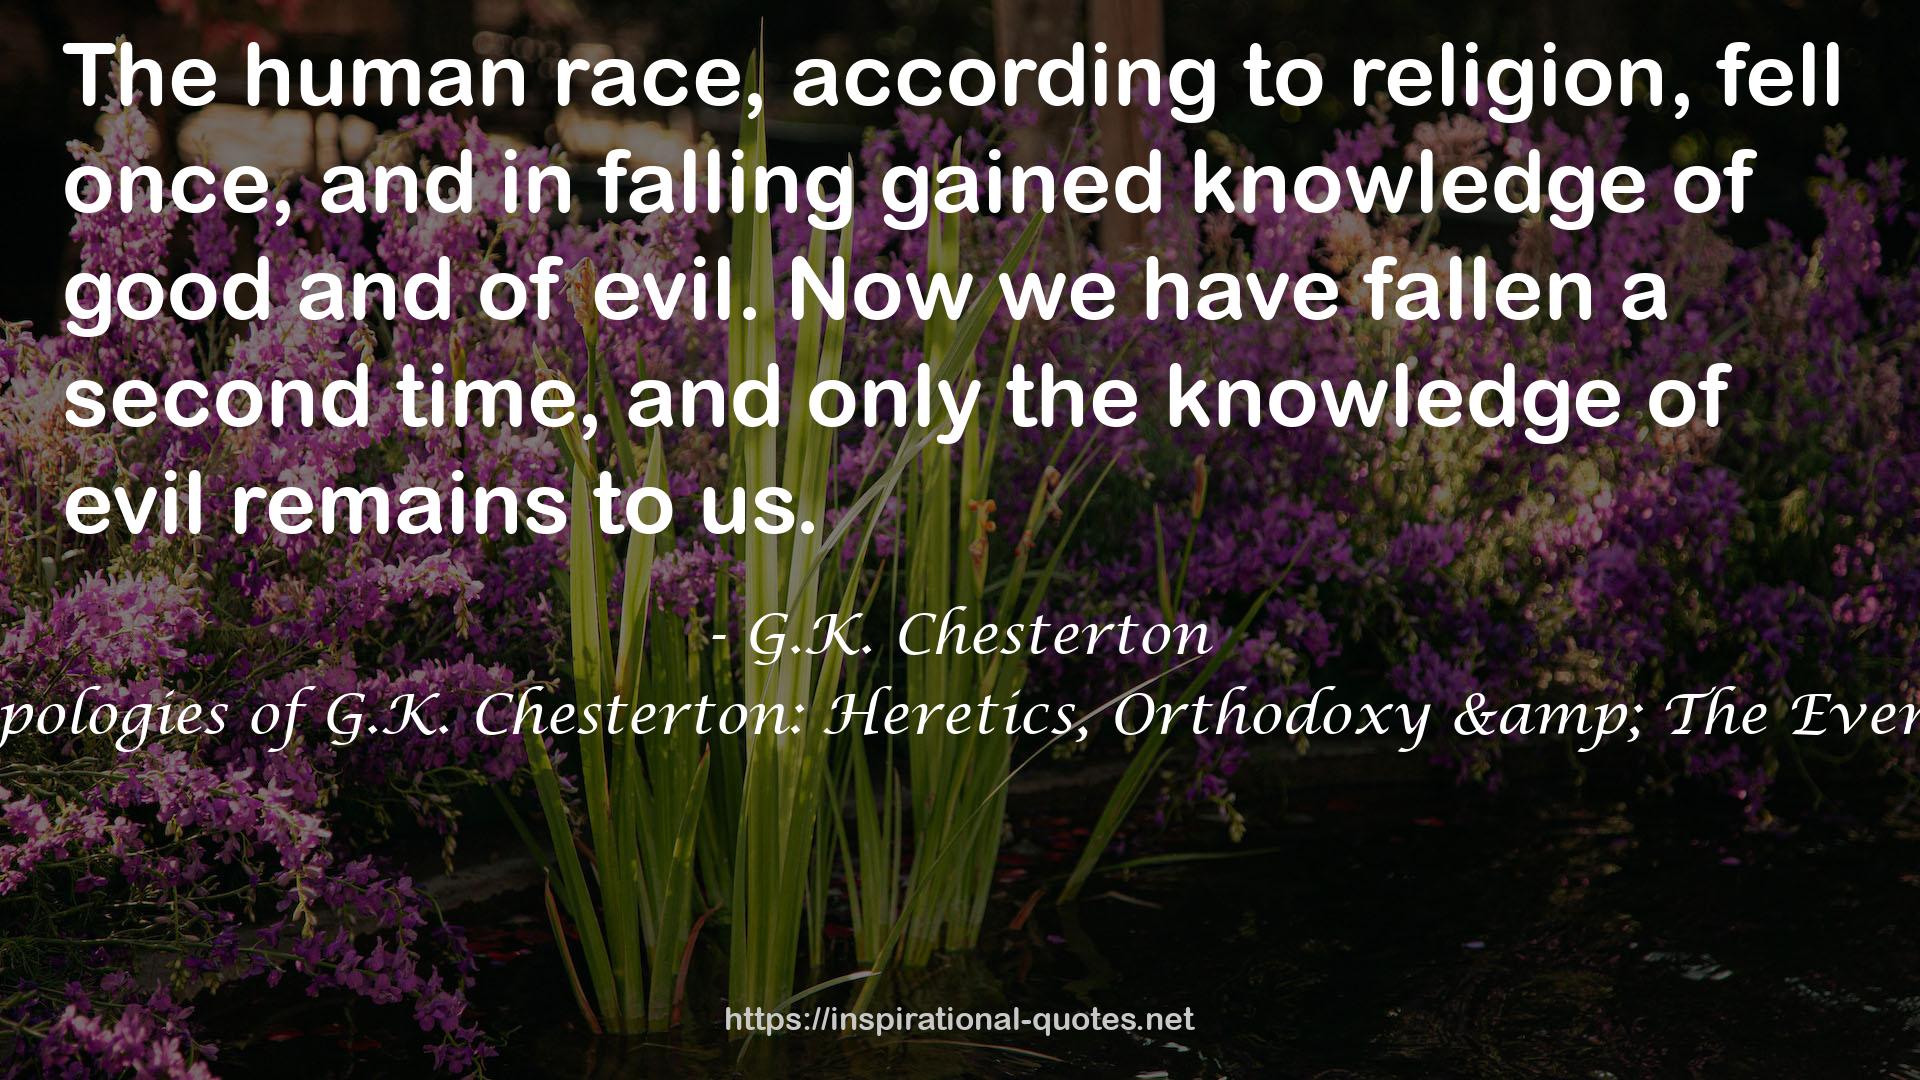 The Three Apologies of G.K. Chesterton: Heretics, Orthodoxy & The Everlasting Man QUOTES